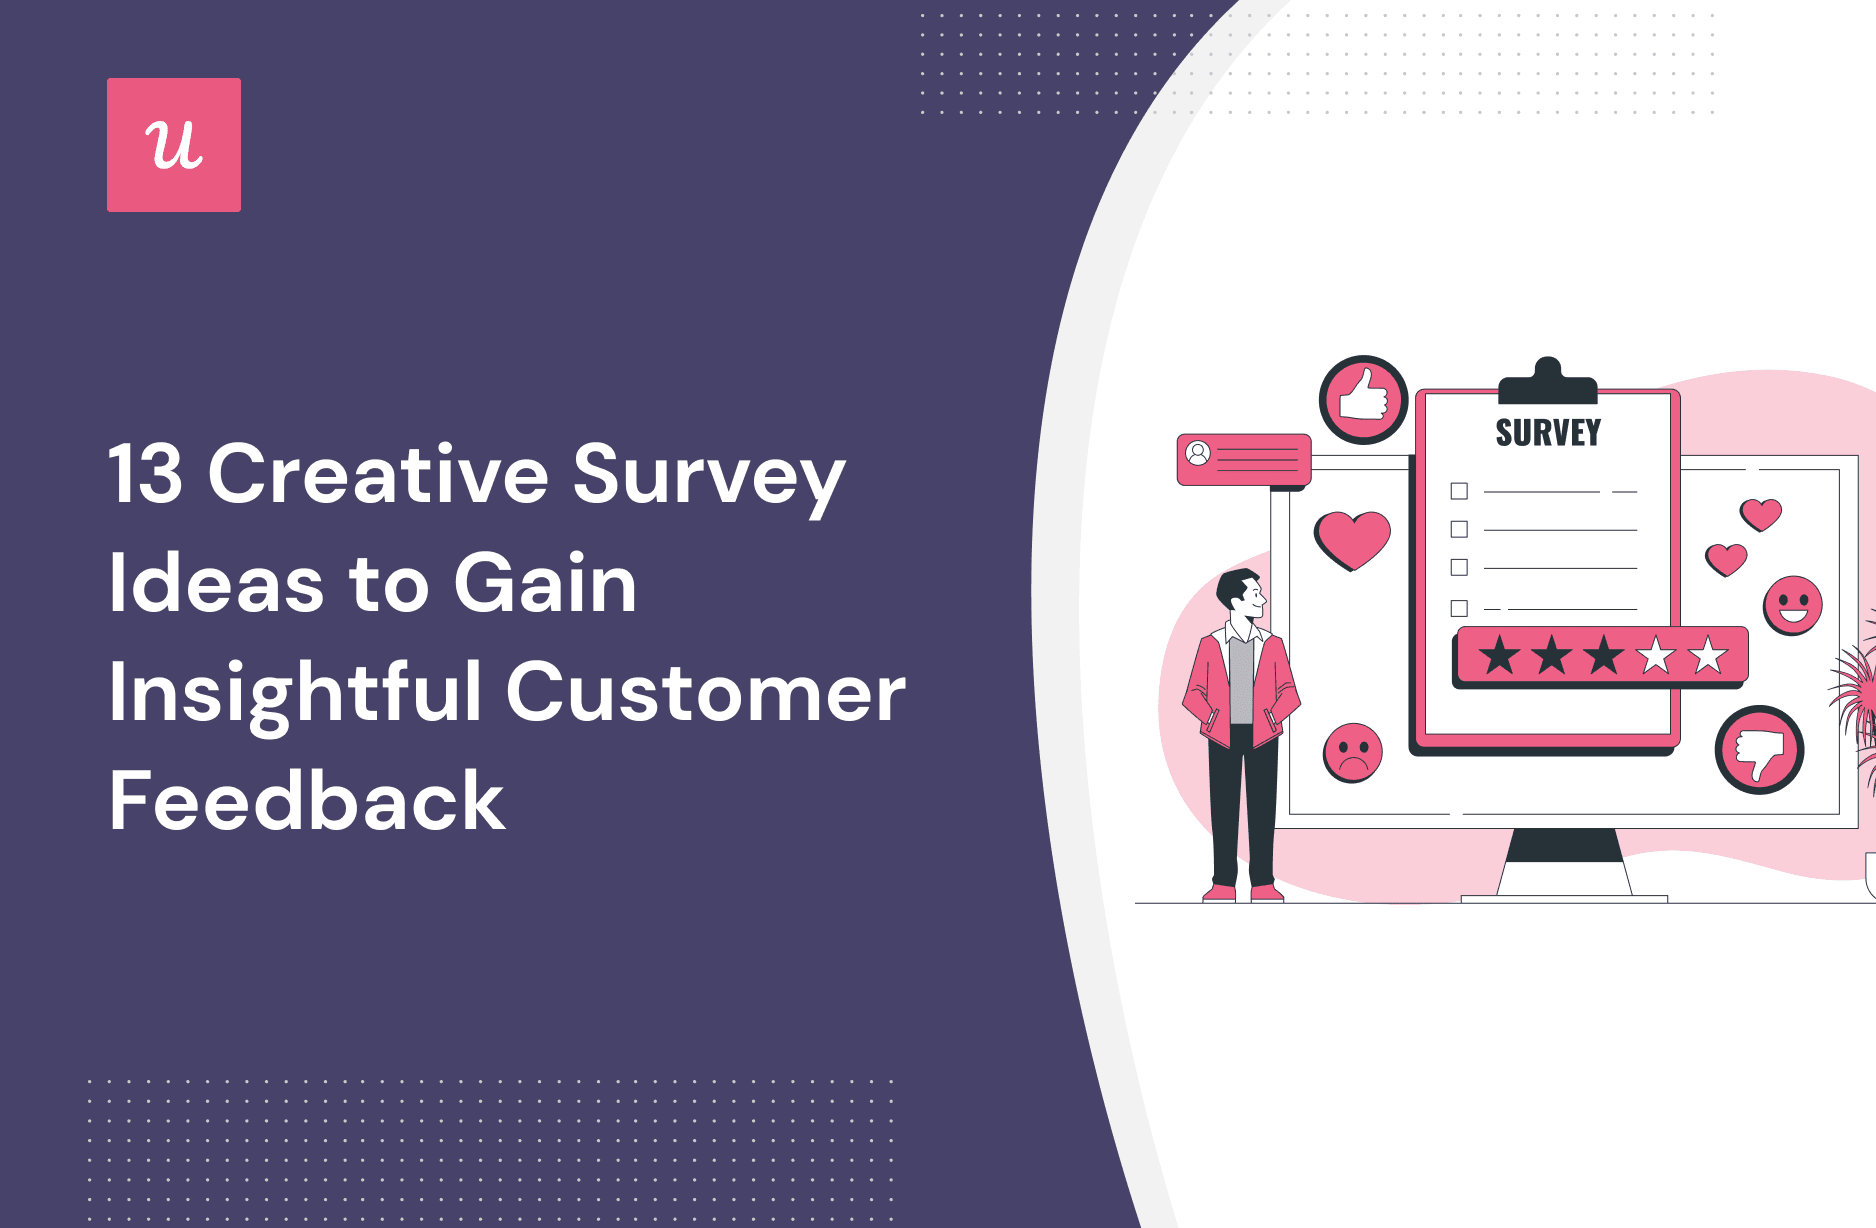 13 Creative Survey Ideas to Gain Insightful Customer Feedback cover